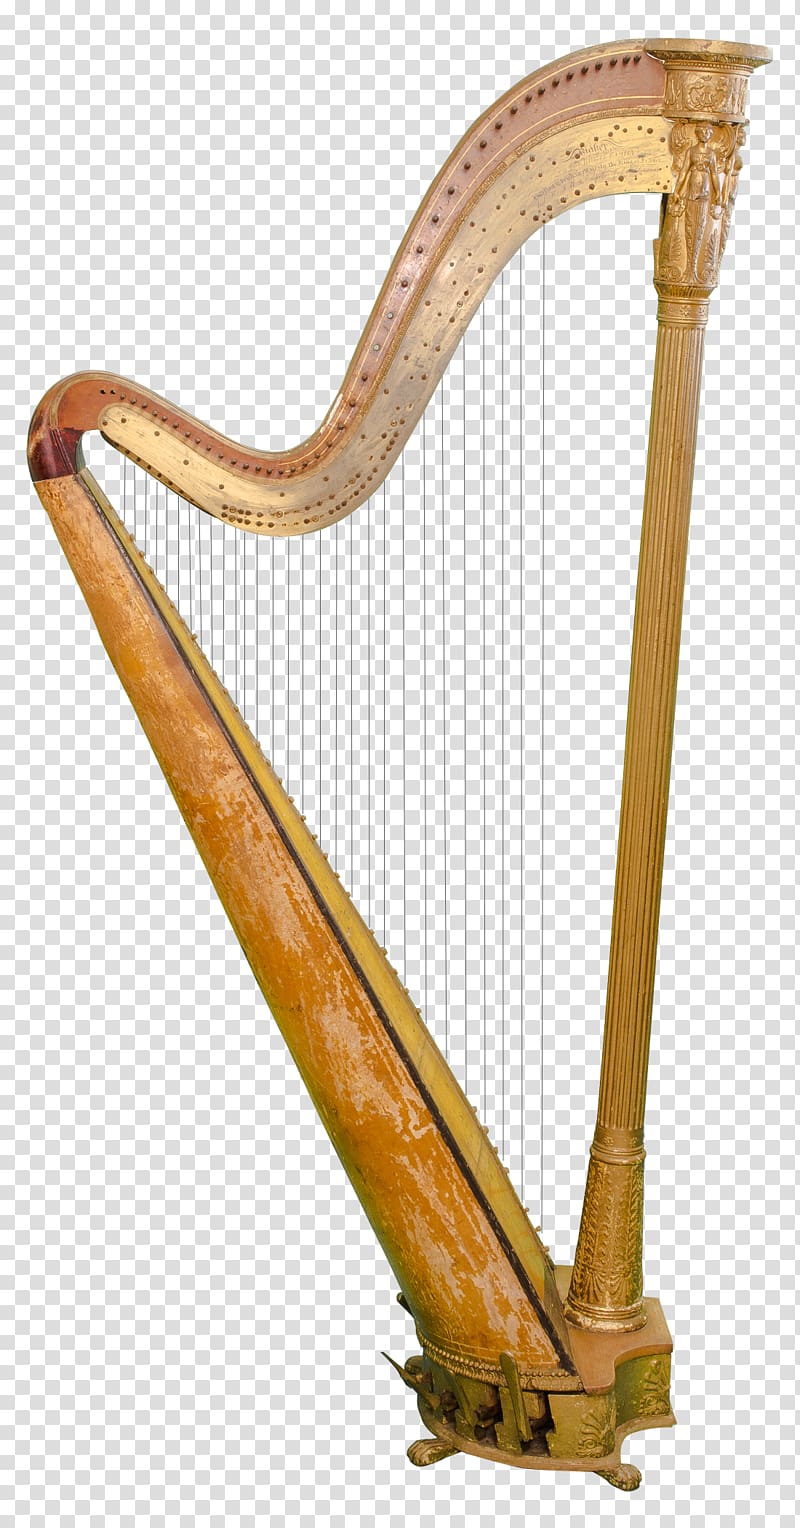 Celtic harp Musical Instruments, harp transparent background PNG clipart